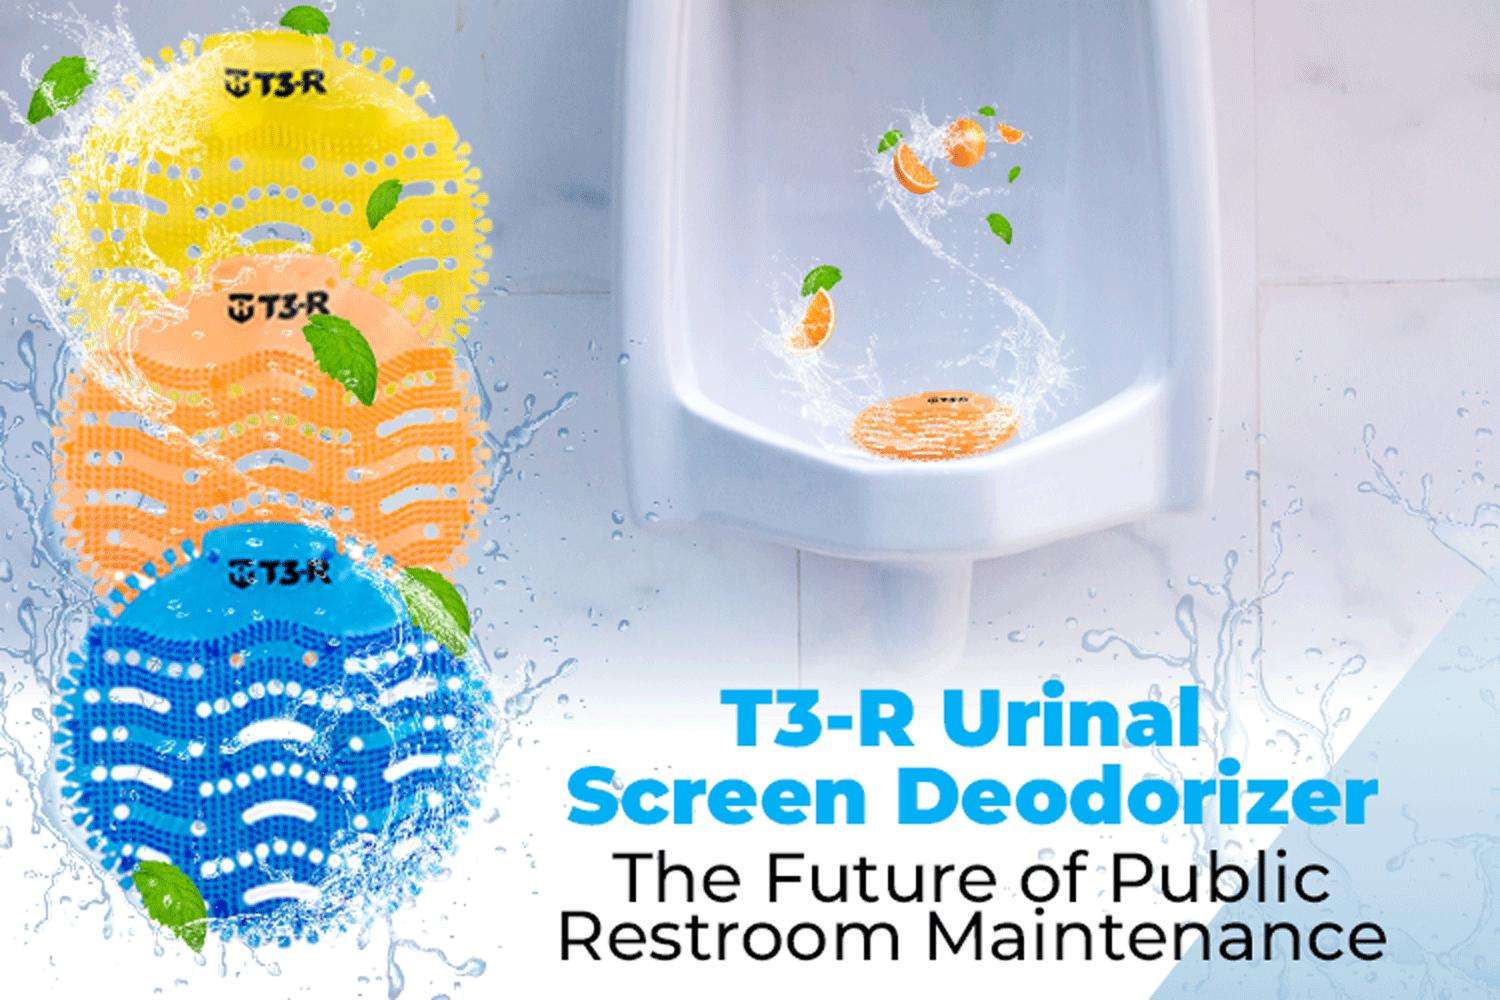 T3-R urinal screen deodorizer